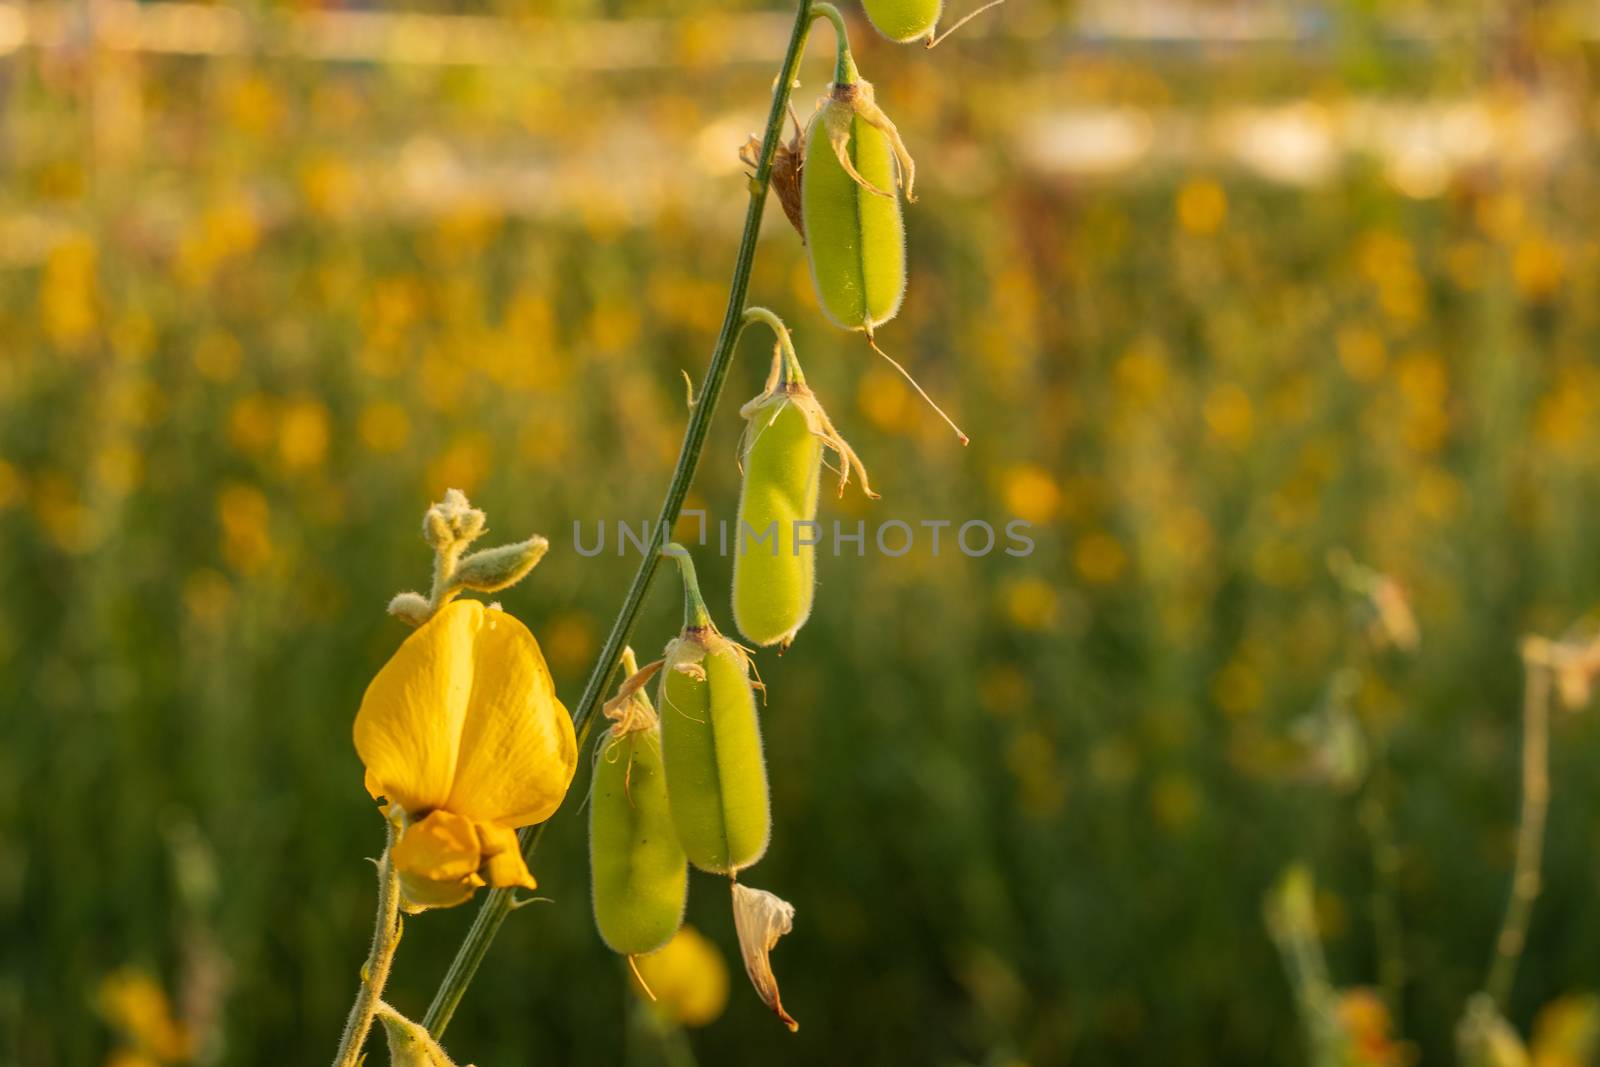 Sunn hemp Indian hemp Crotalaria juncea or Pummelo field is a beautiful yellow flower in fields.